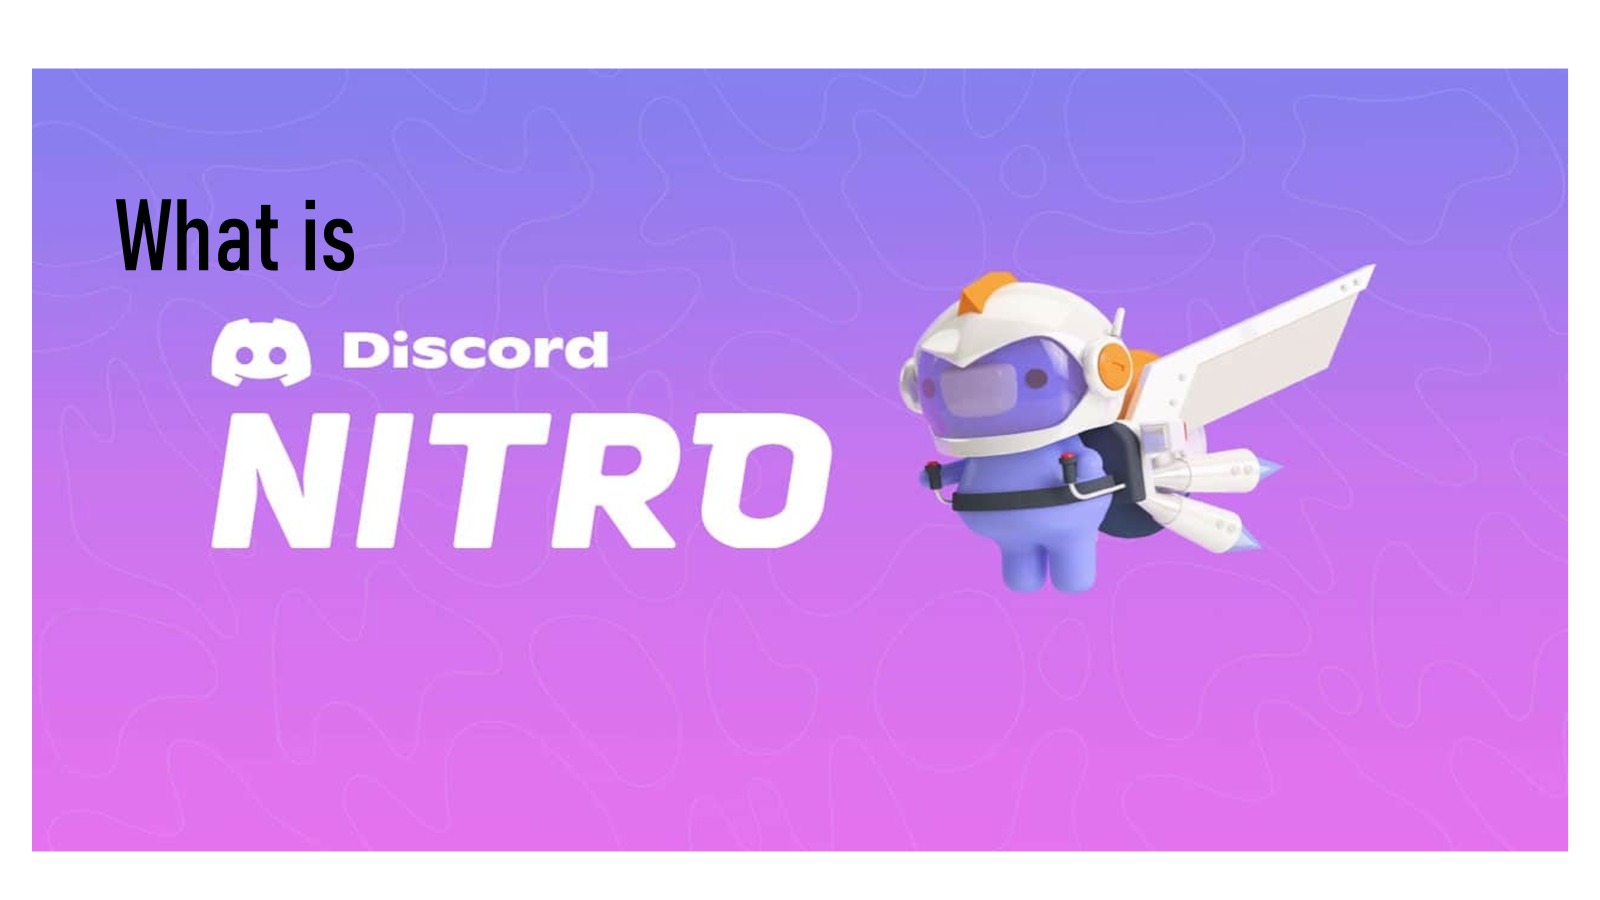 What is Discord Nitro